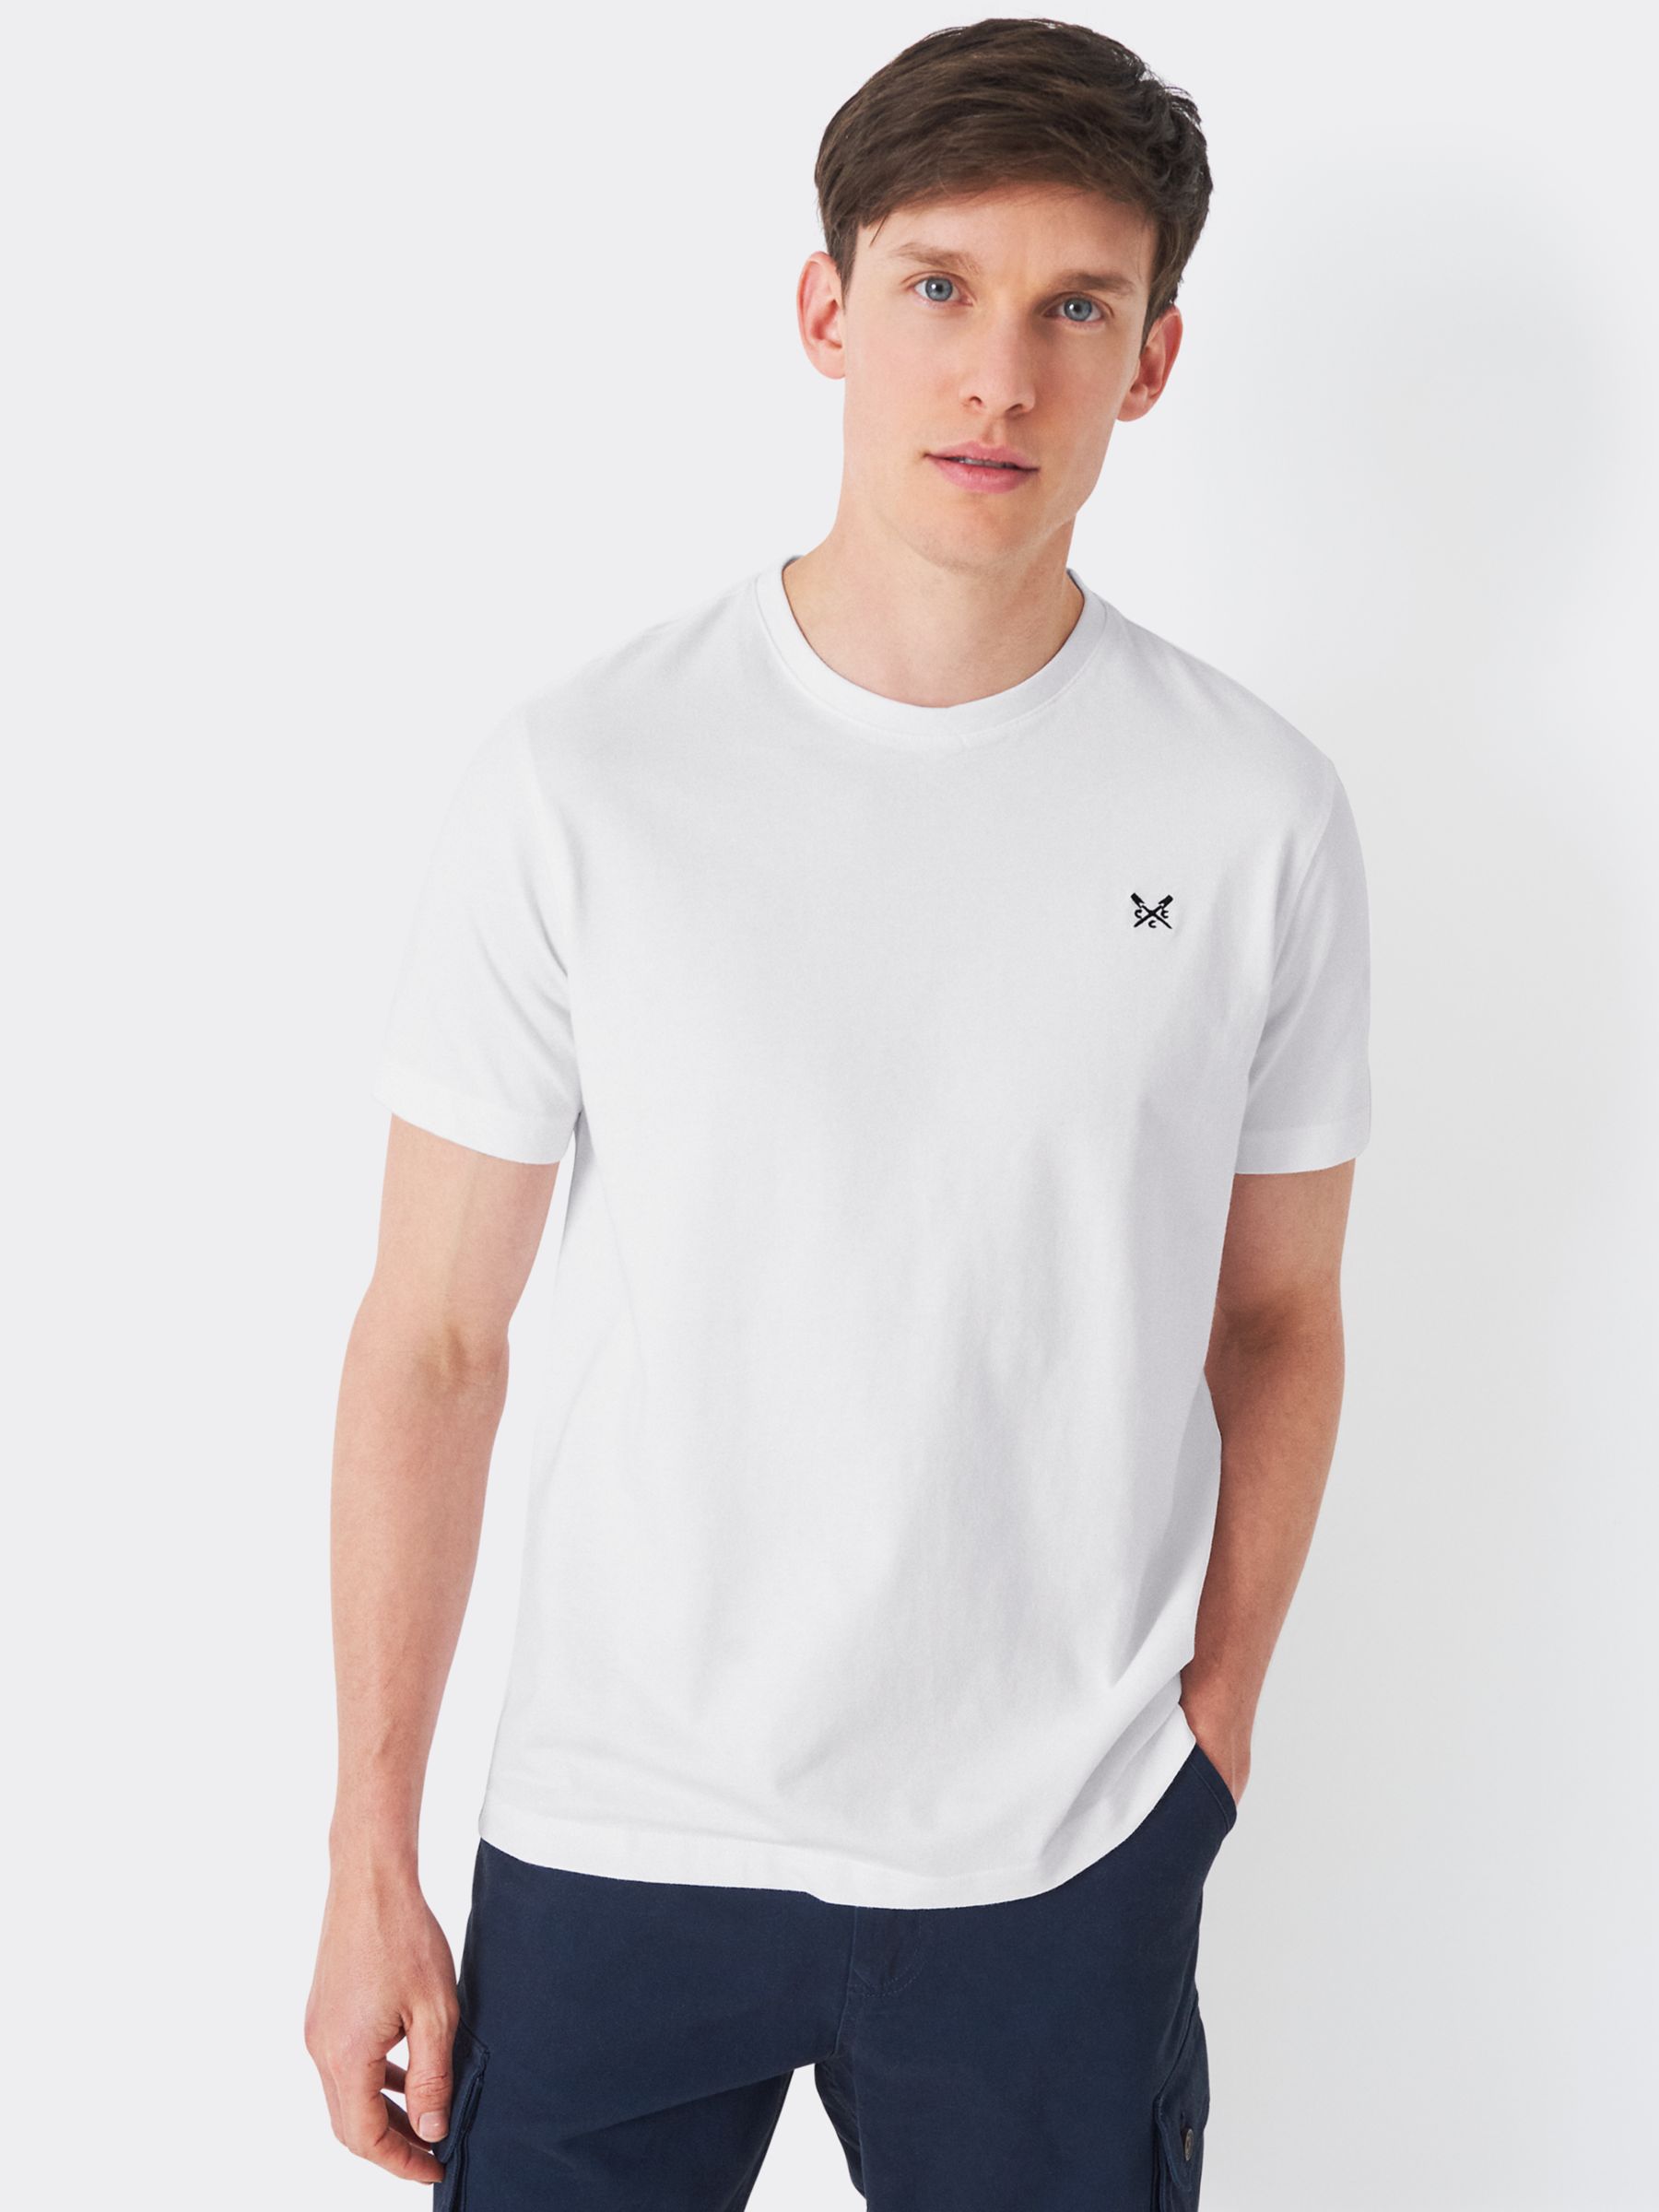 Crew Clothing Crew Neck T-Shirt, White, XS